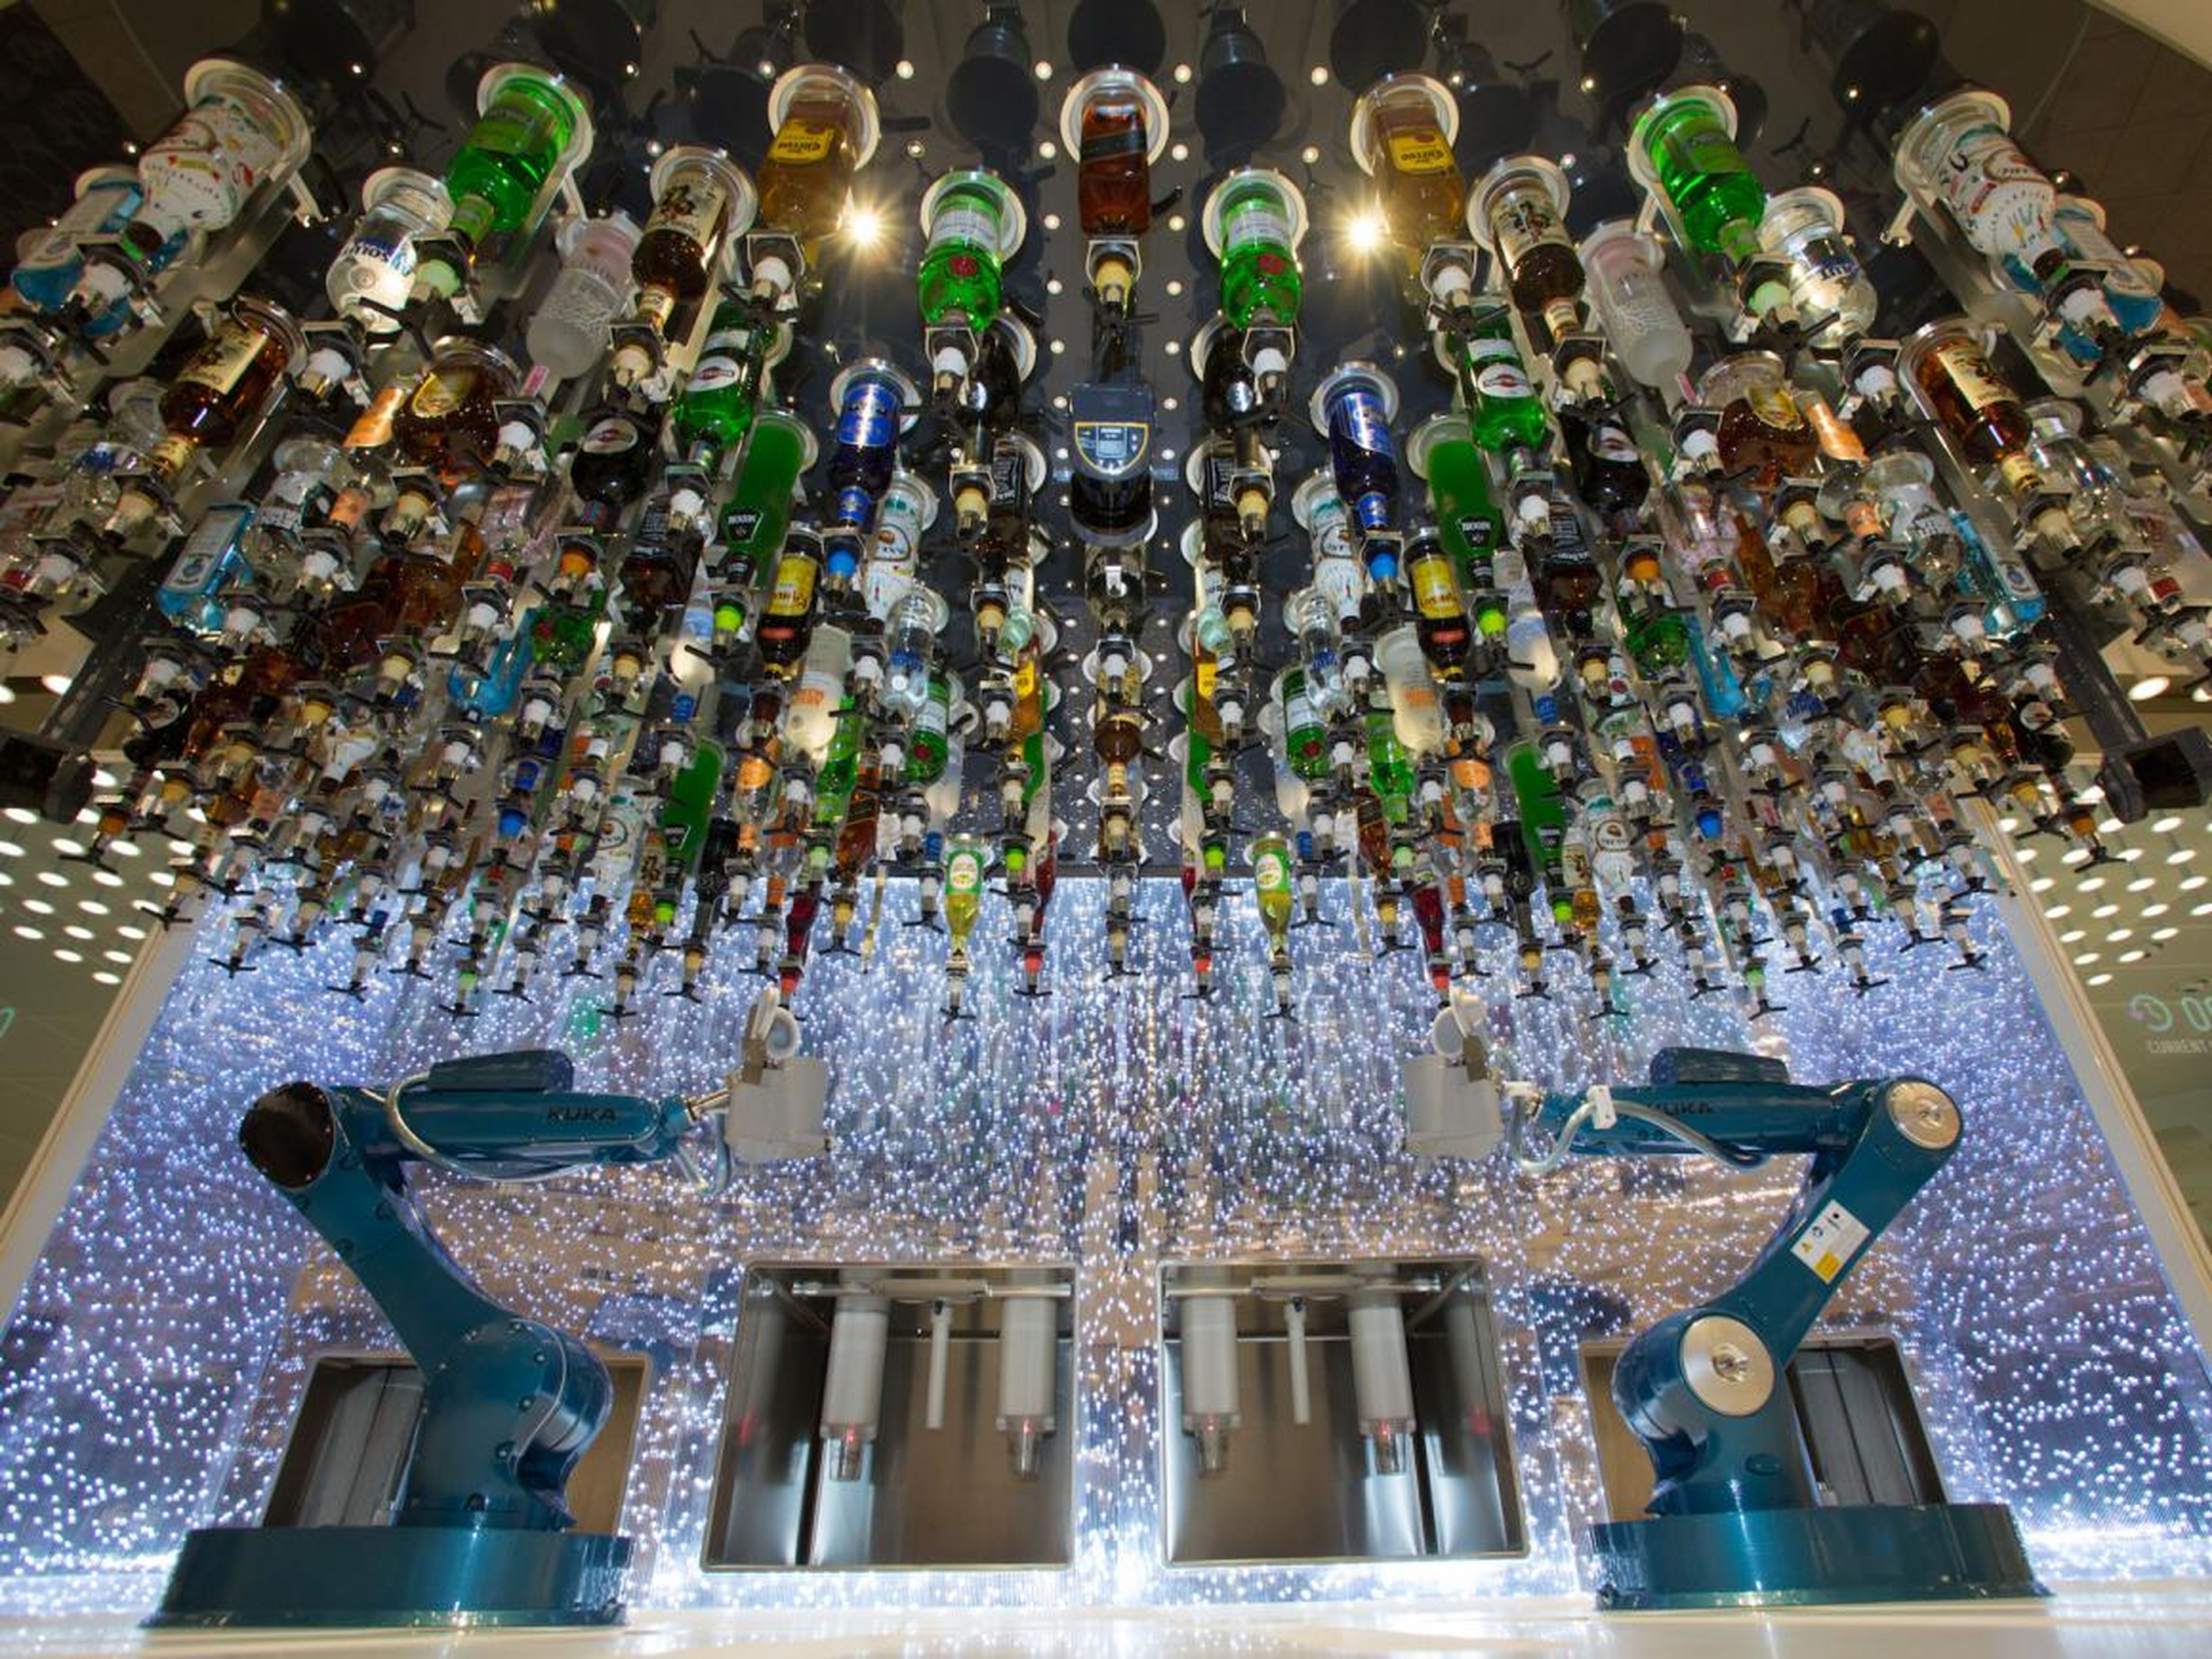 At the Bionic Bar, robot bartenders serve passengers drinks.